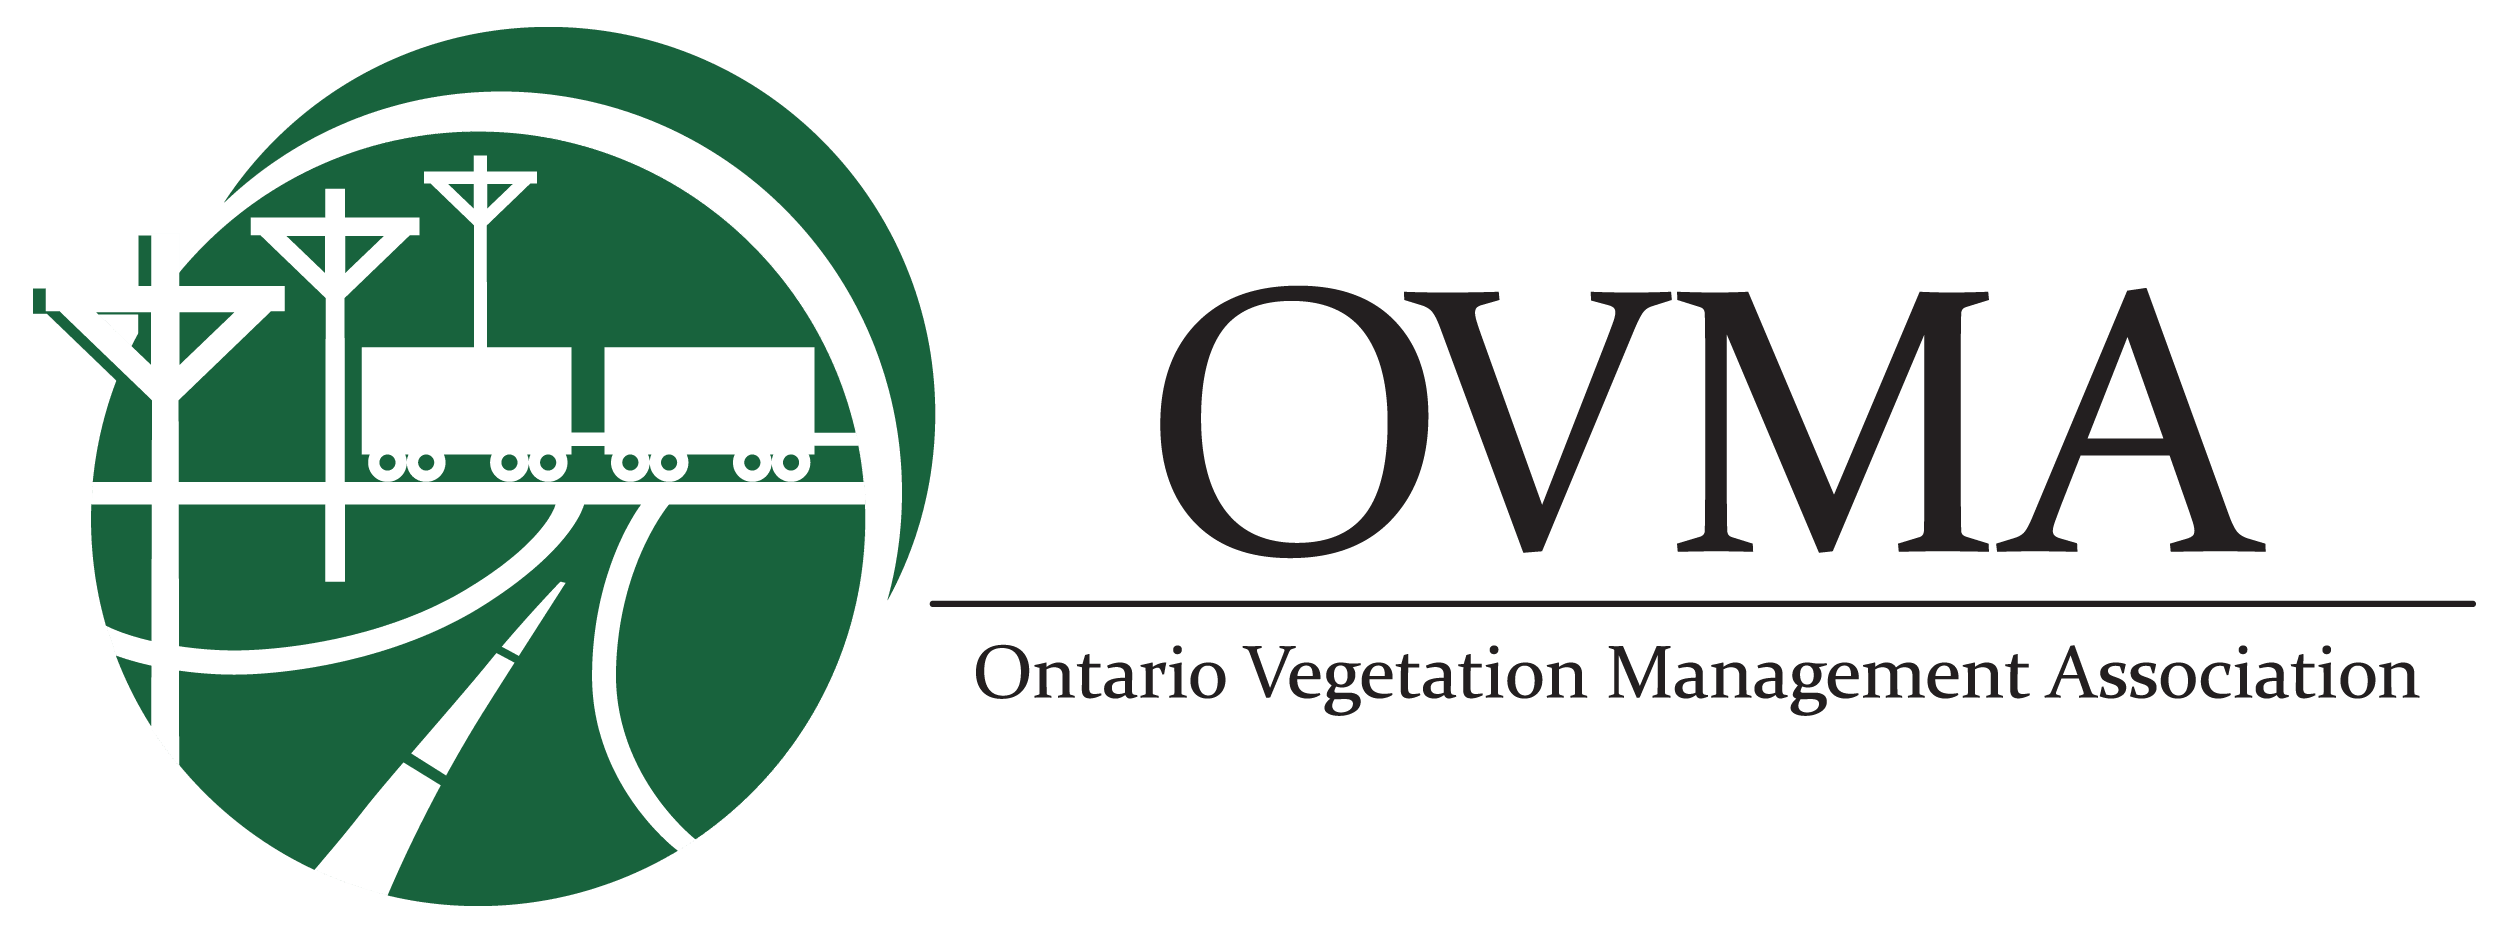 Meeting Ontario's Vegetation Management Needs